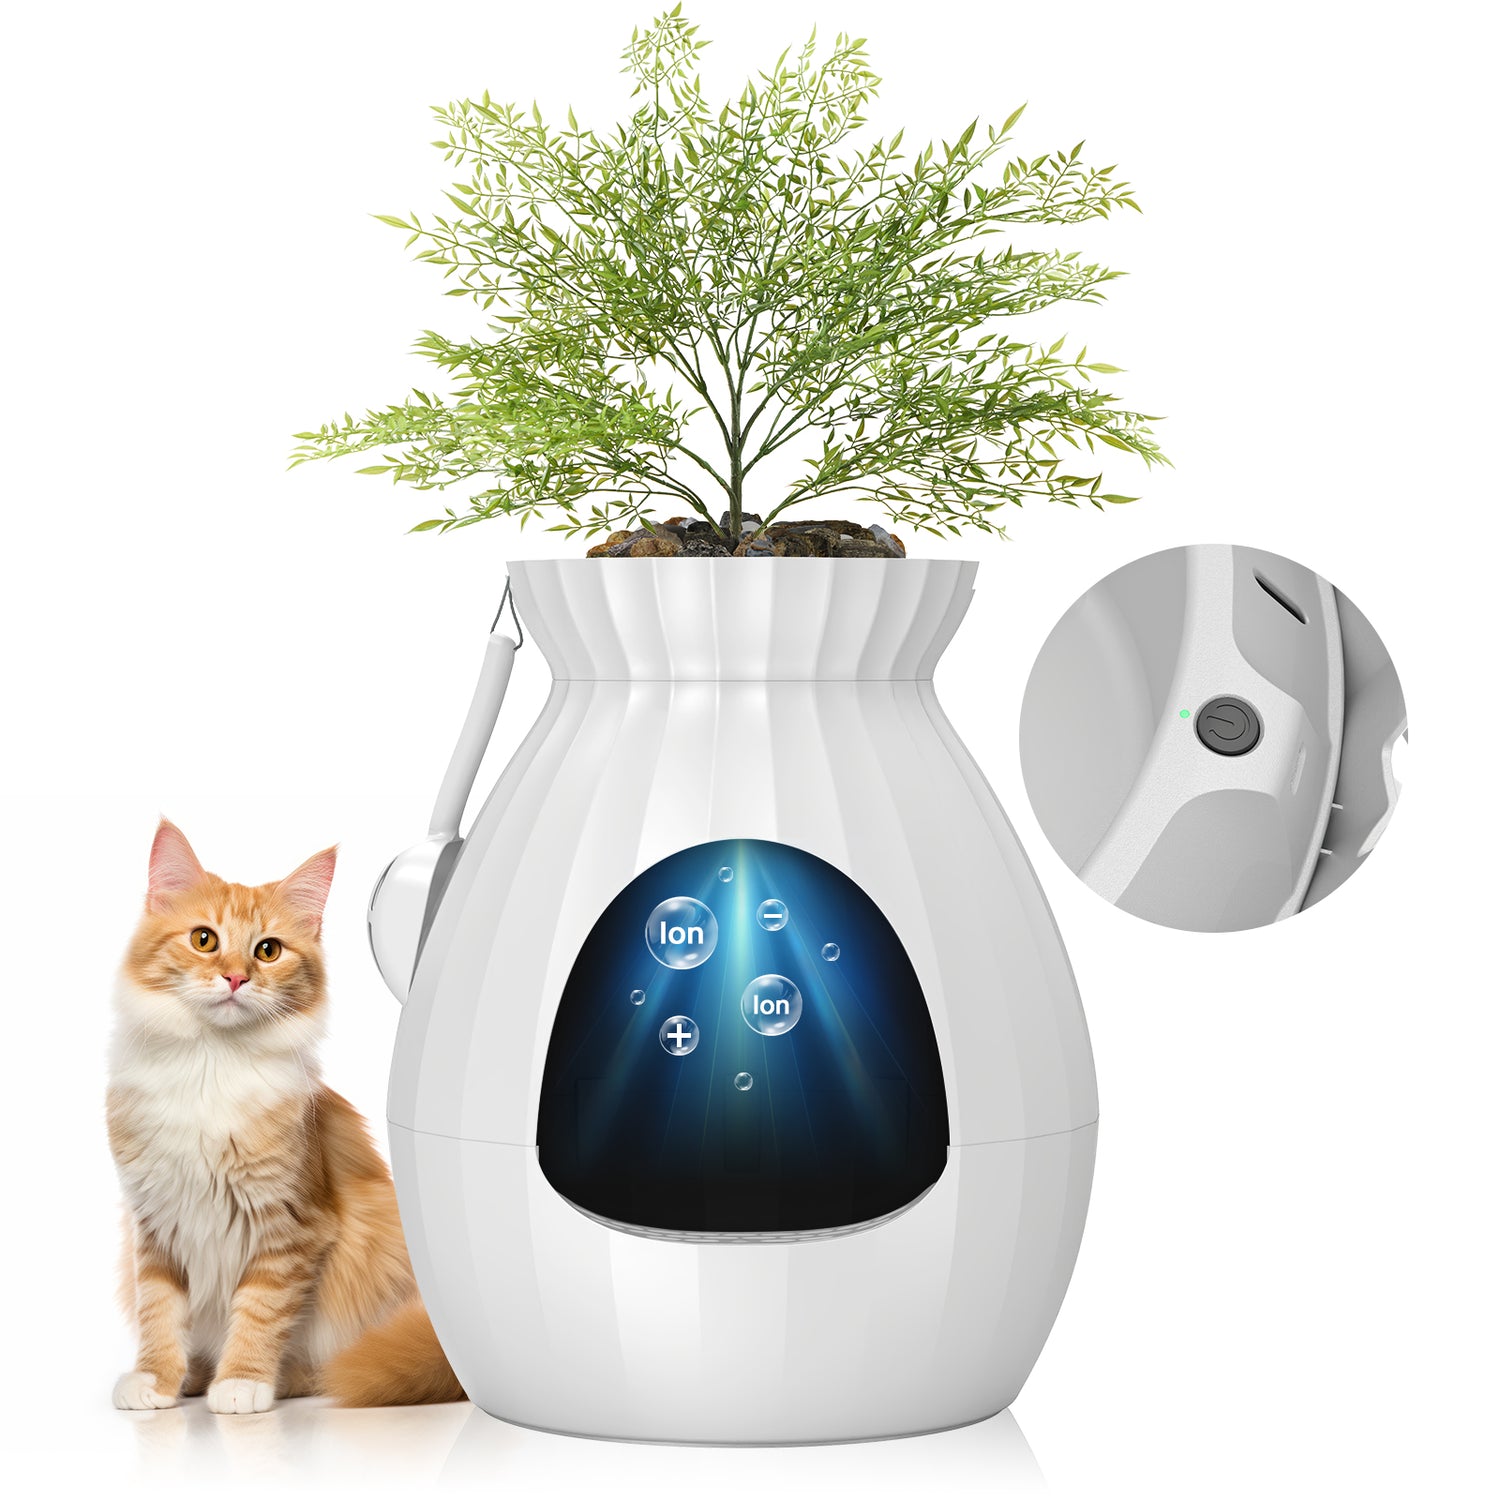 Hidden Plant Smart Odor Removal Cat Litter Box